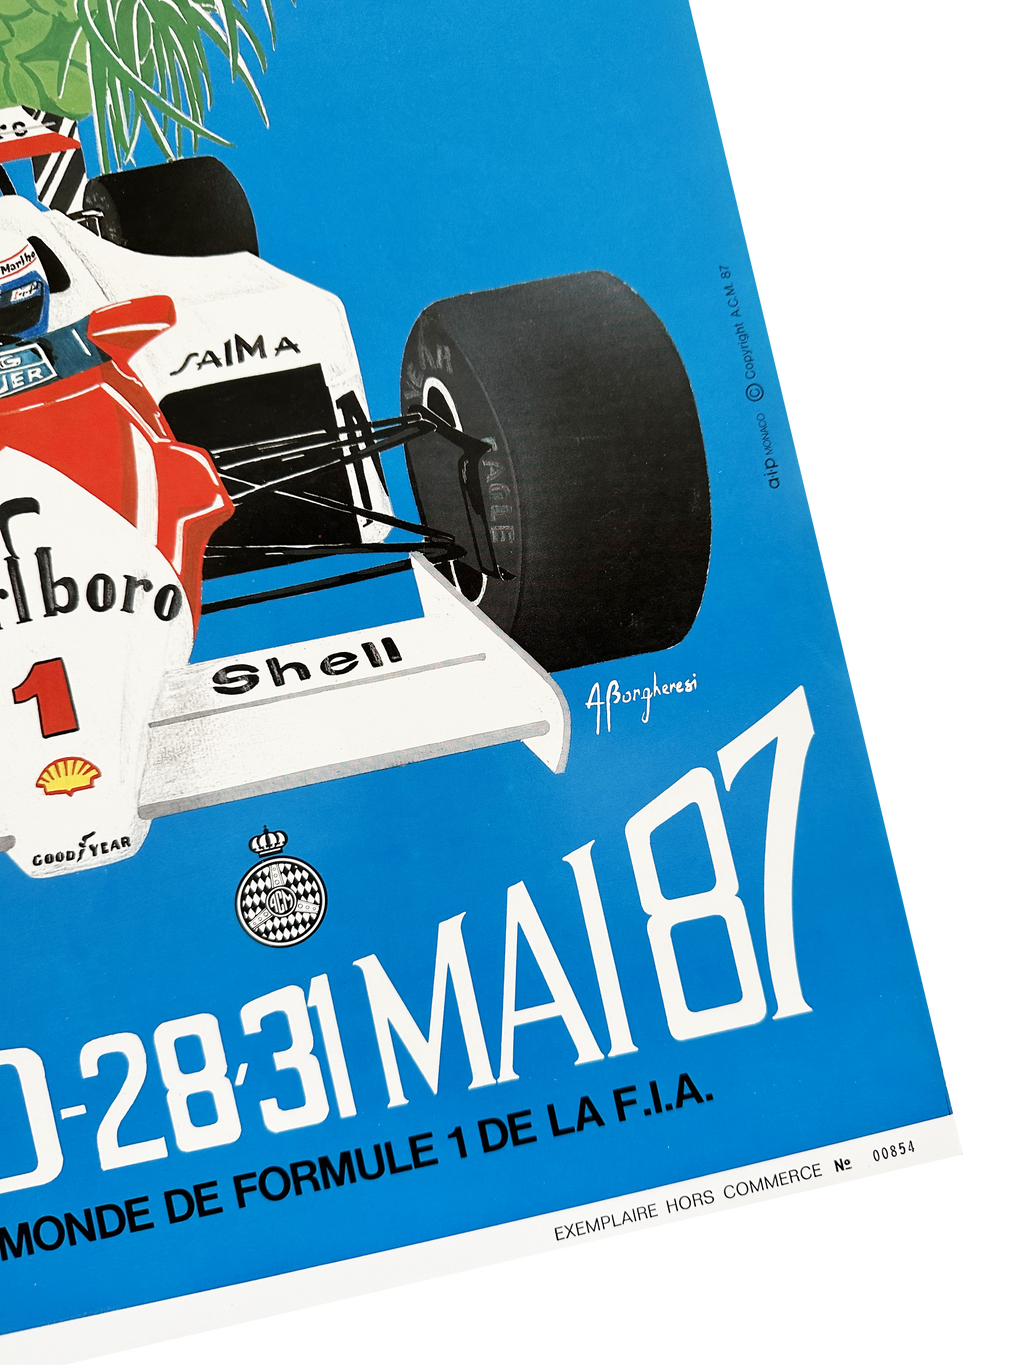 Original Formula 1 Poster - Grand Prix Monaco 1987 (numbered